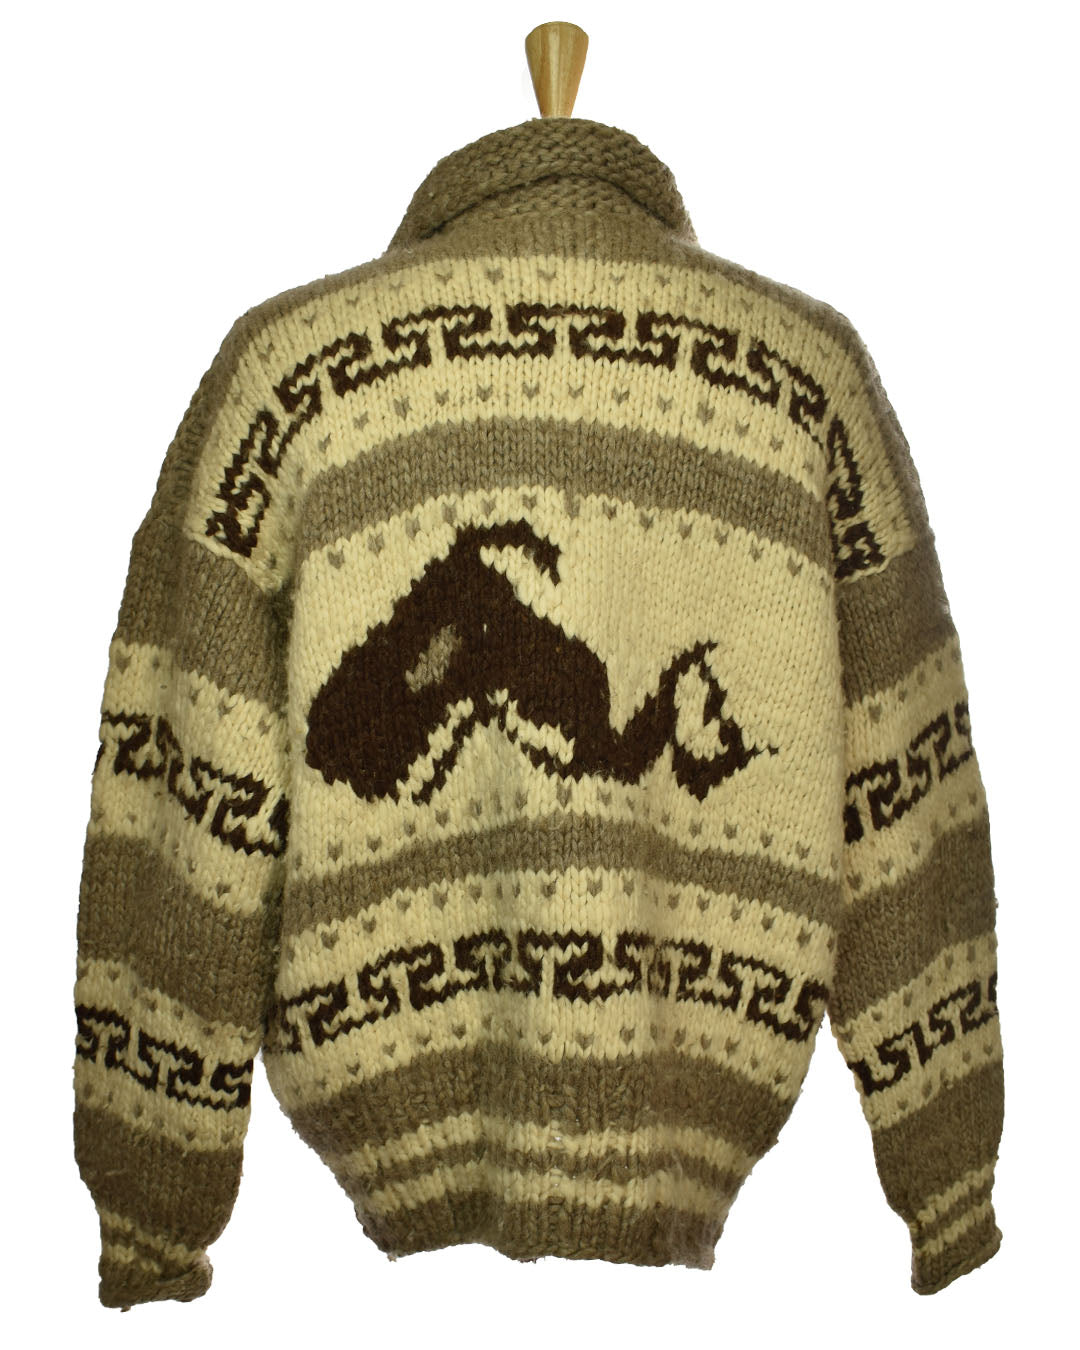 Hand Knit Cowichan Sweater 100% Virgin Buffalo Wool Made in Canada Orca Killer Whale